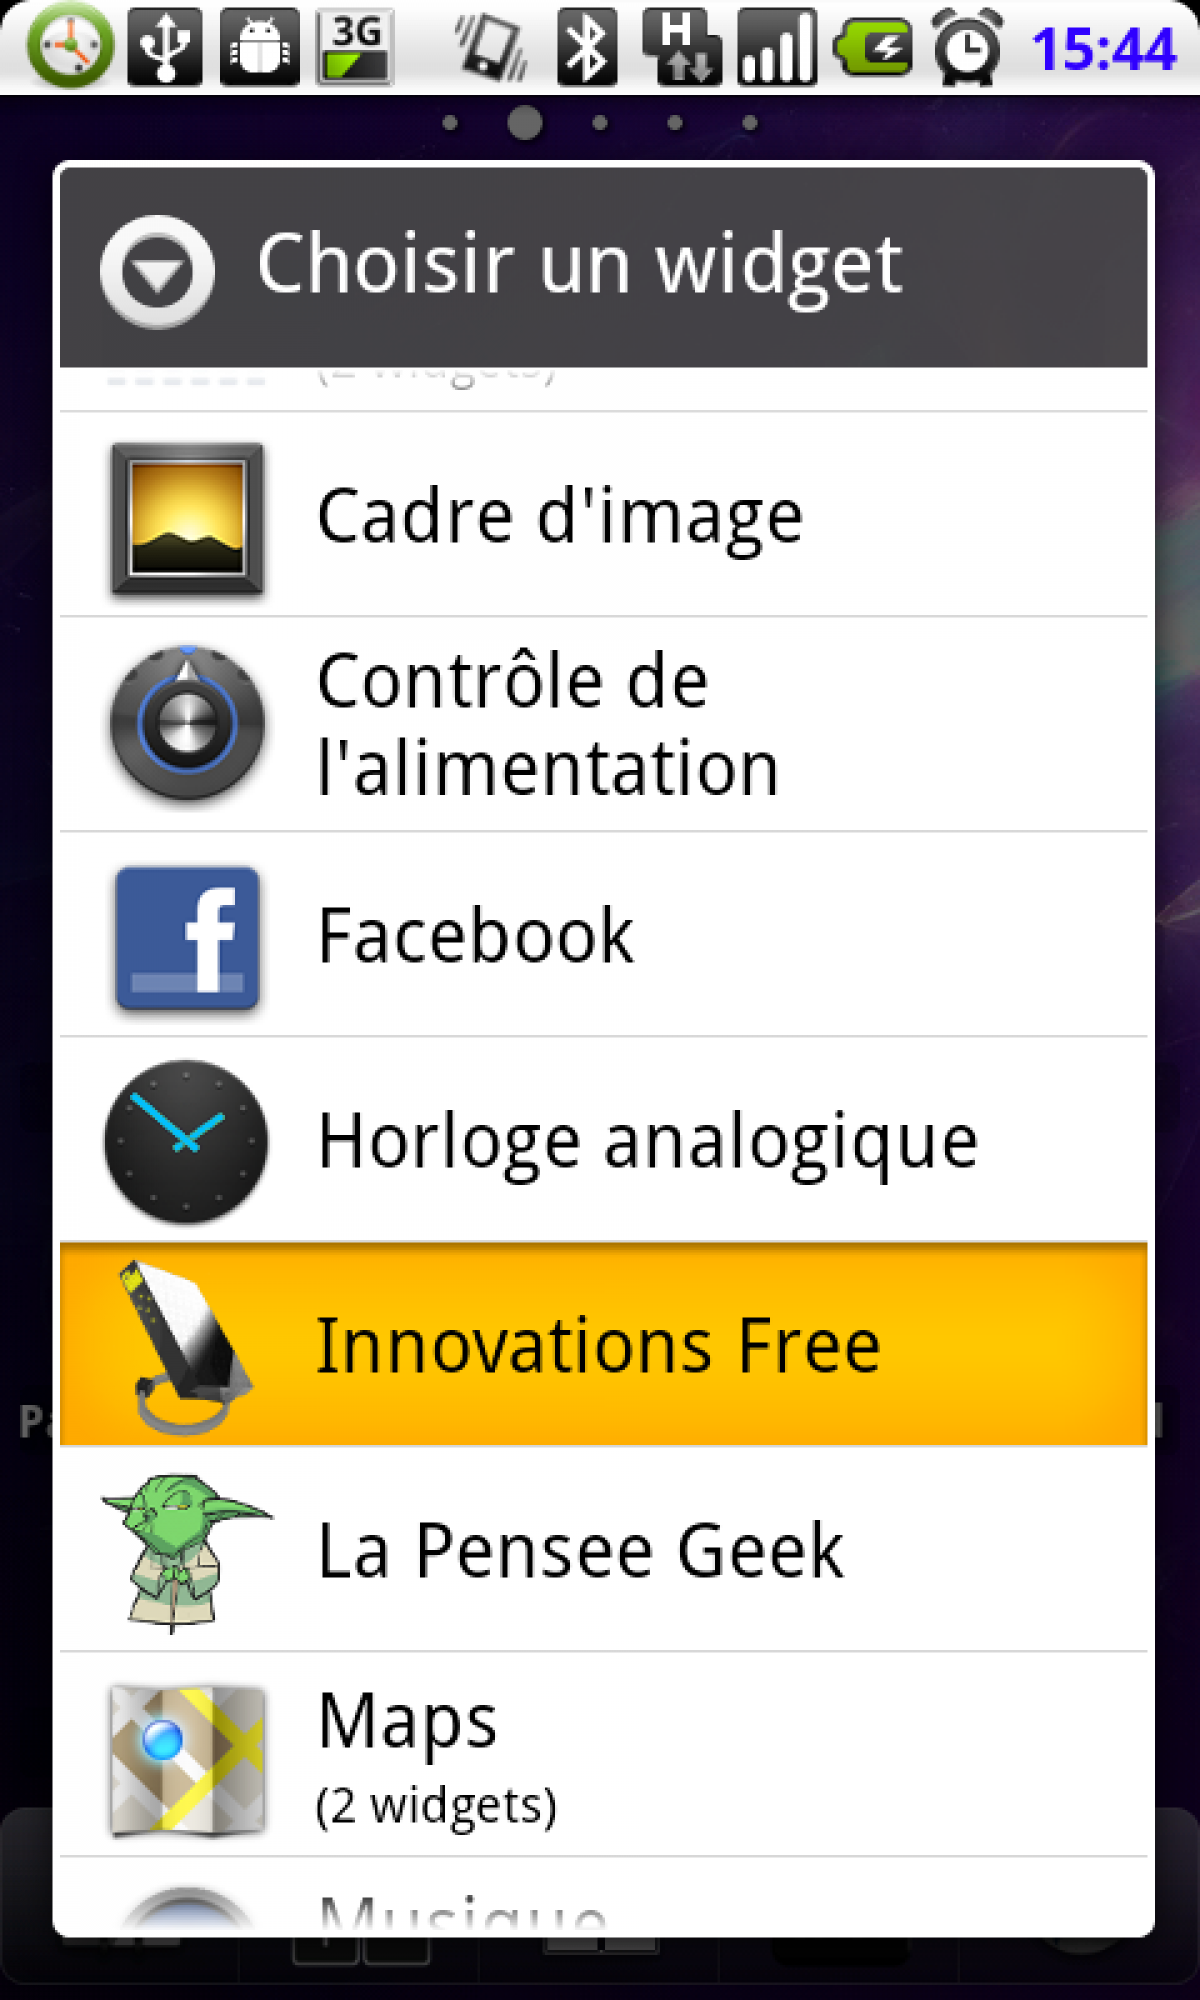 Freebox Mobile : Widget “L’innovation Free du jour”